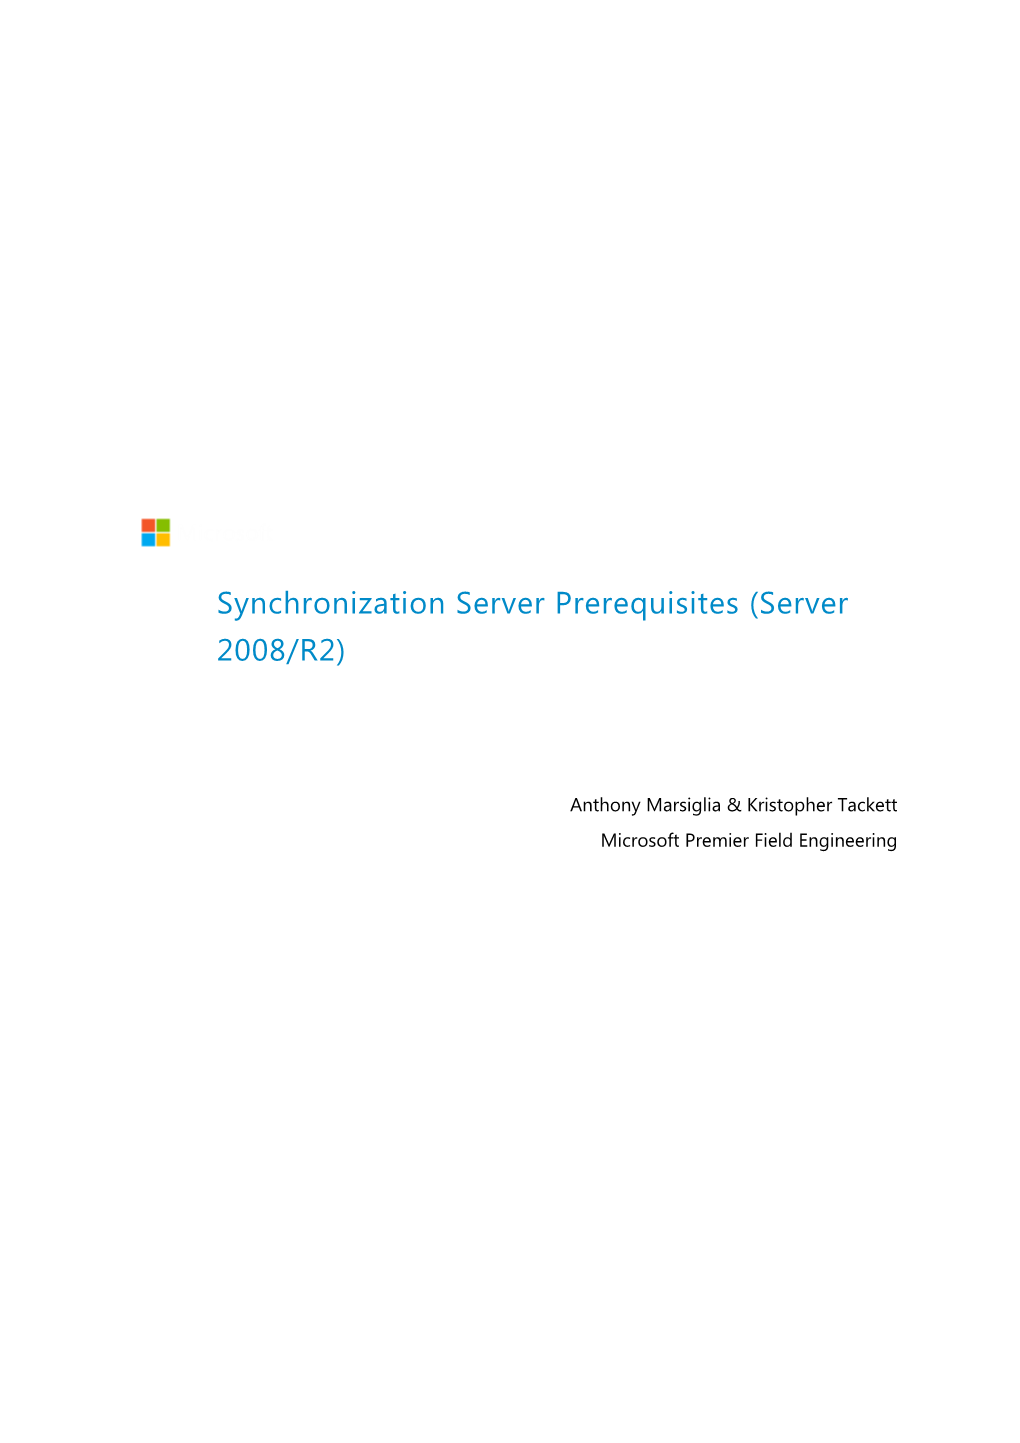 Synchronization Server Prerequisites (Server 2008/R2)